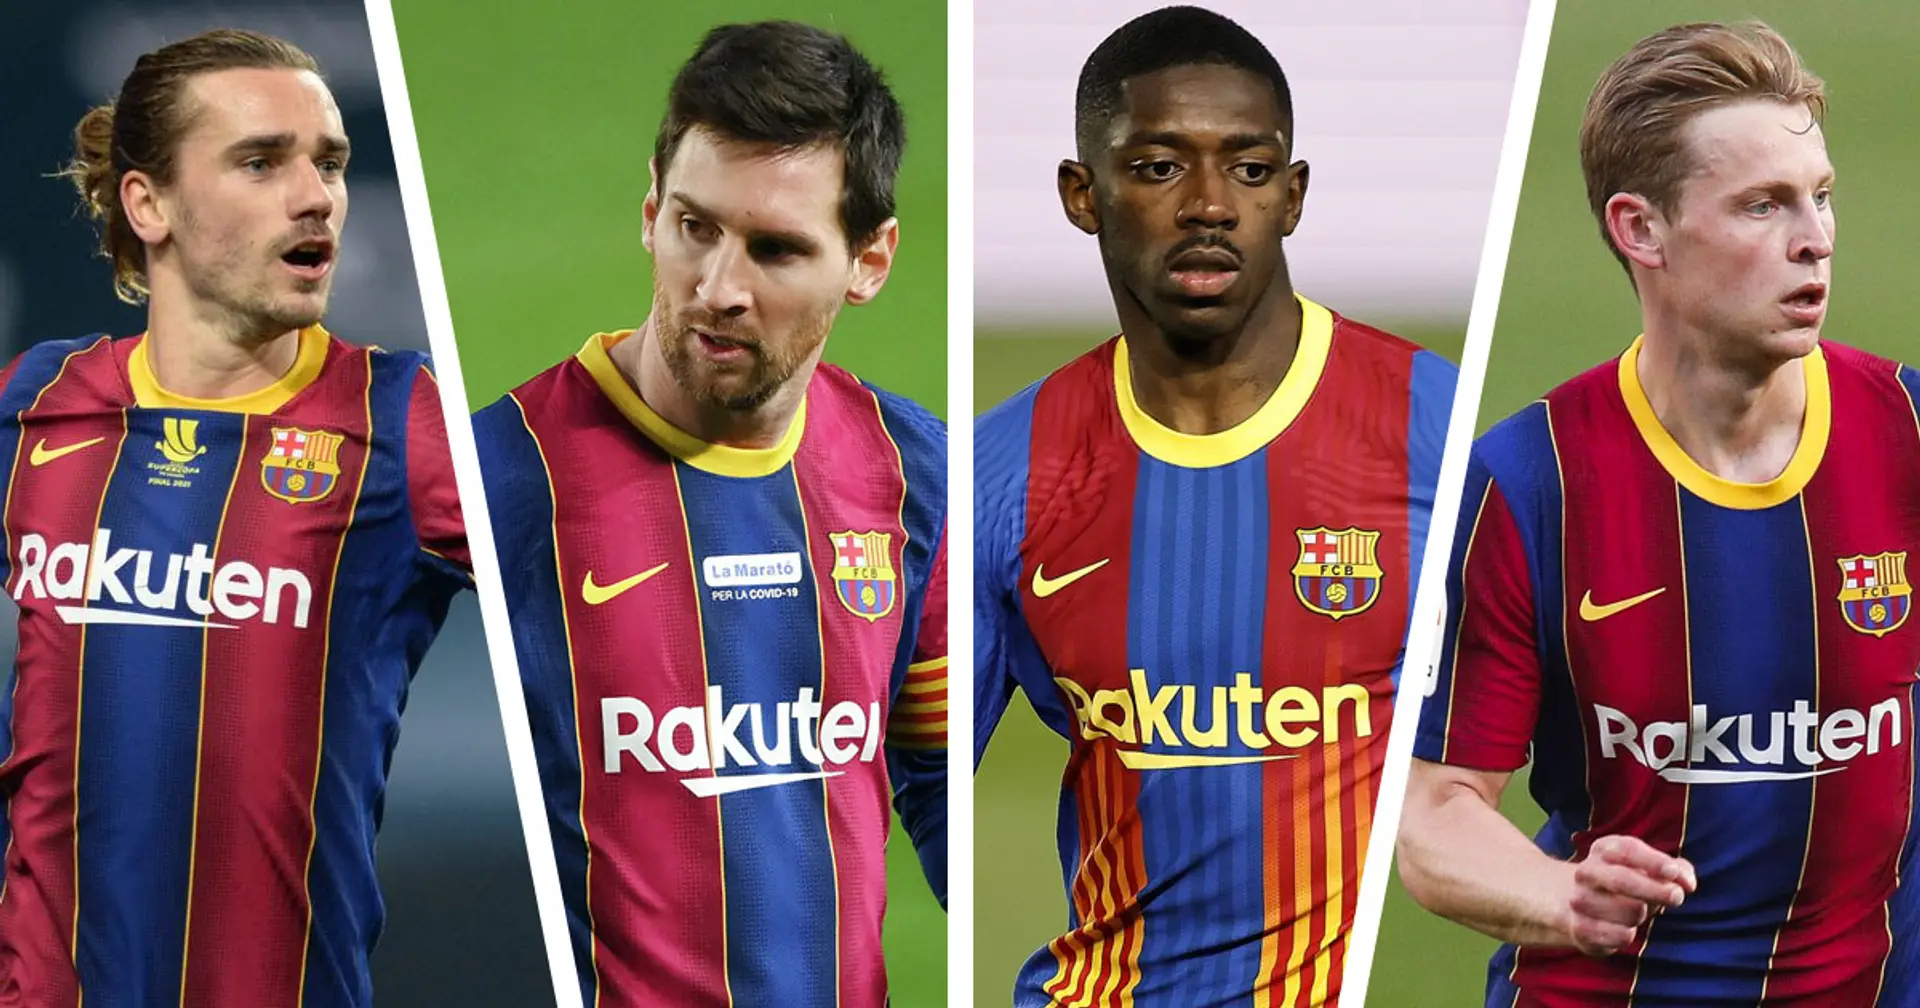 Messi far ahead, De Jong in 4th: a look at Barcelona's top goalscorers in 2020/21 seasons